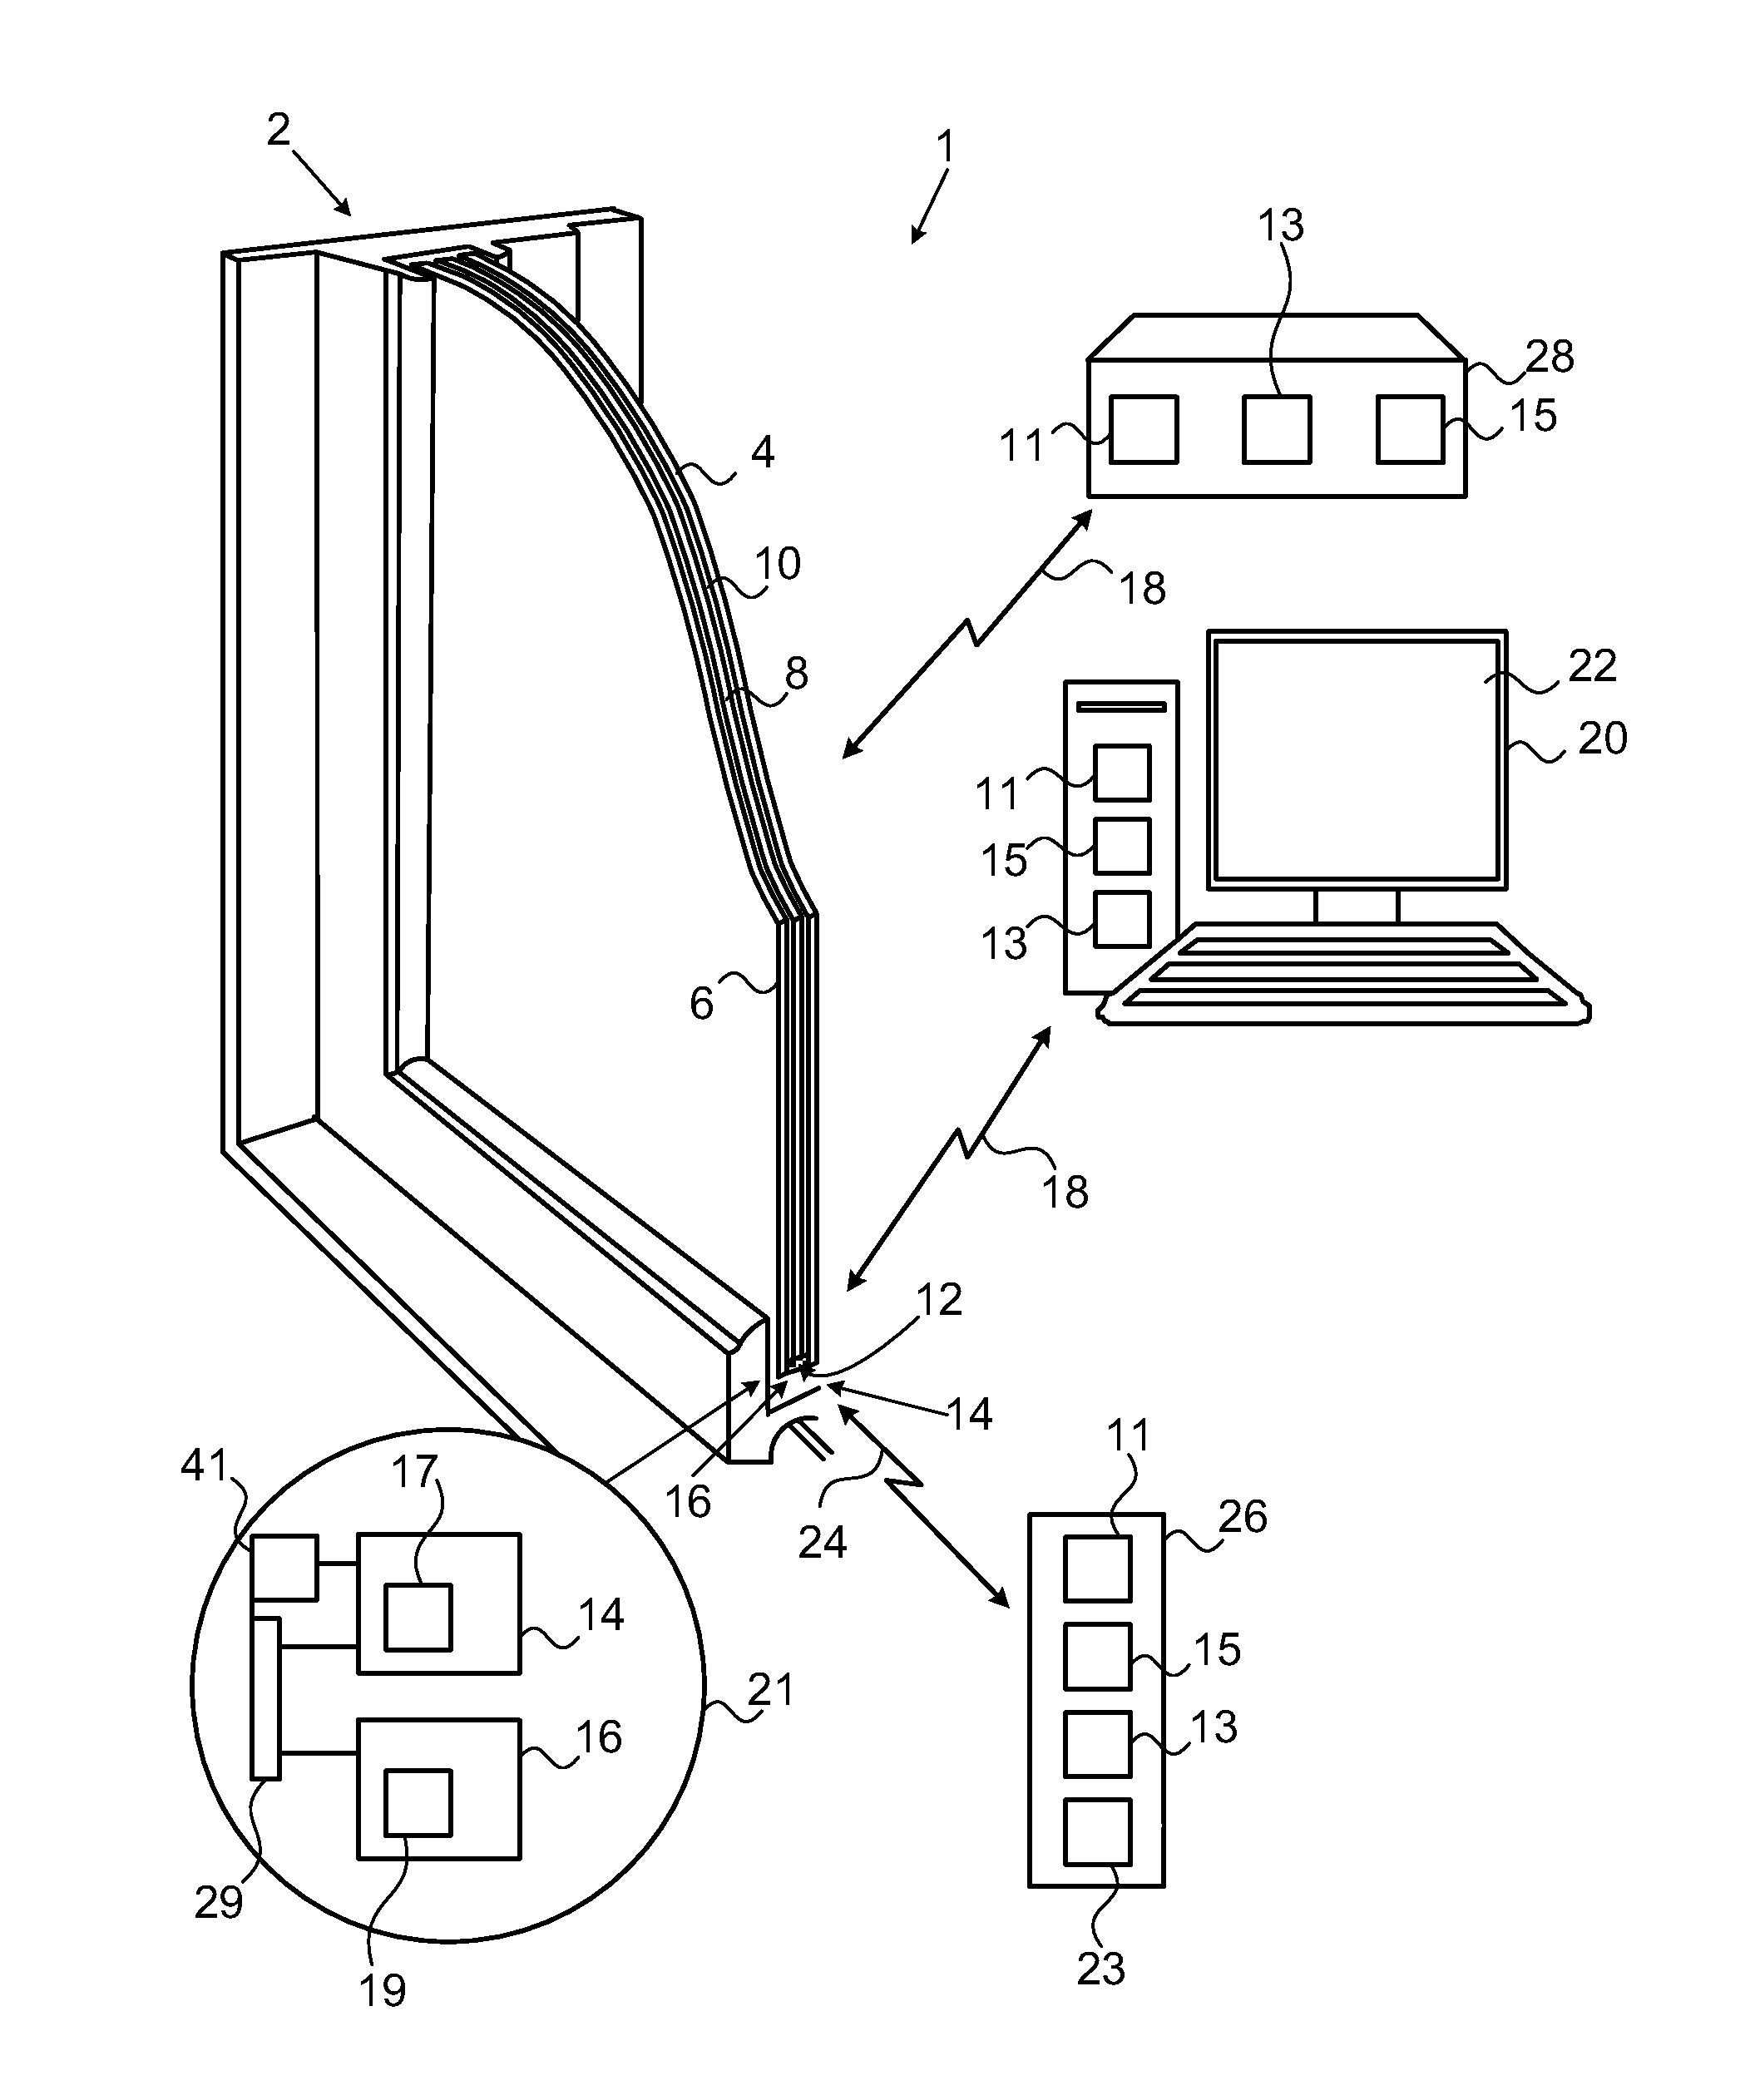 Multi-Sheet Glazing Unit With Internal Sensor